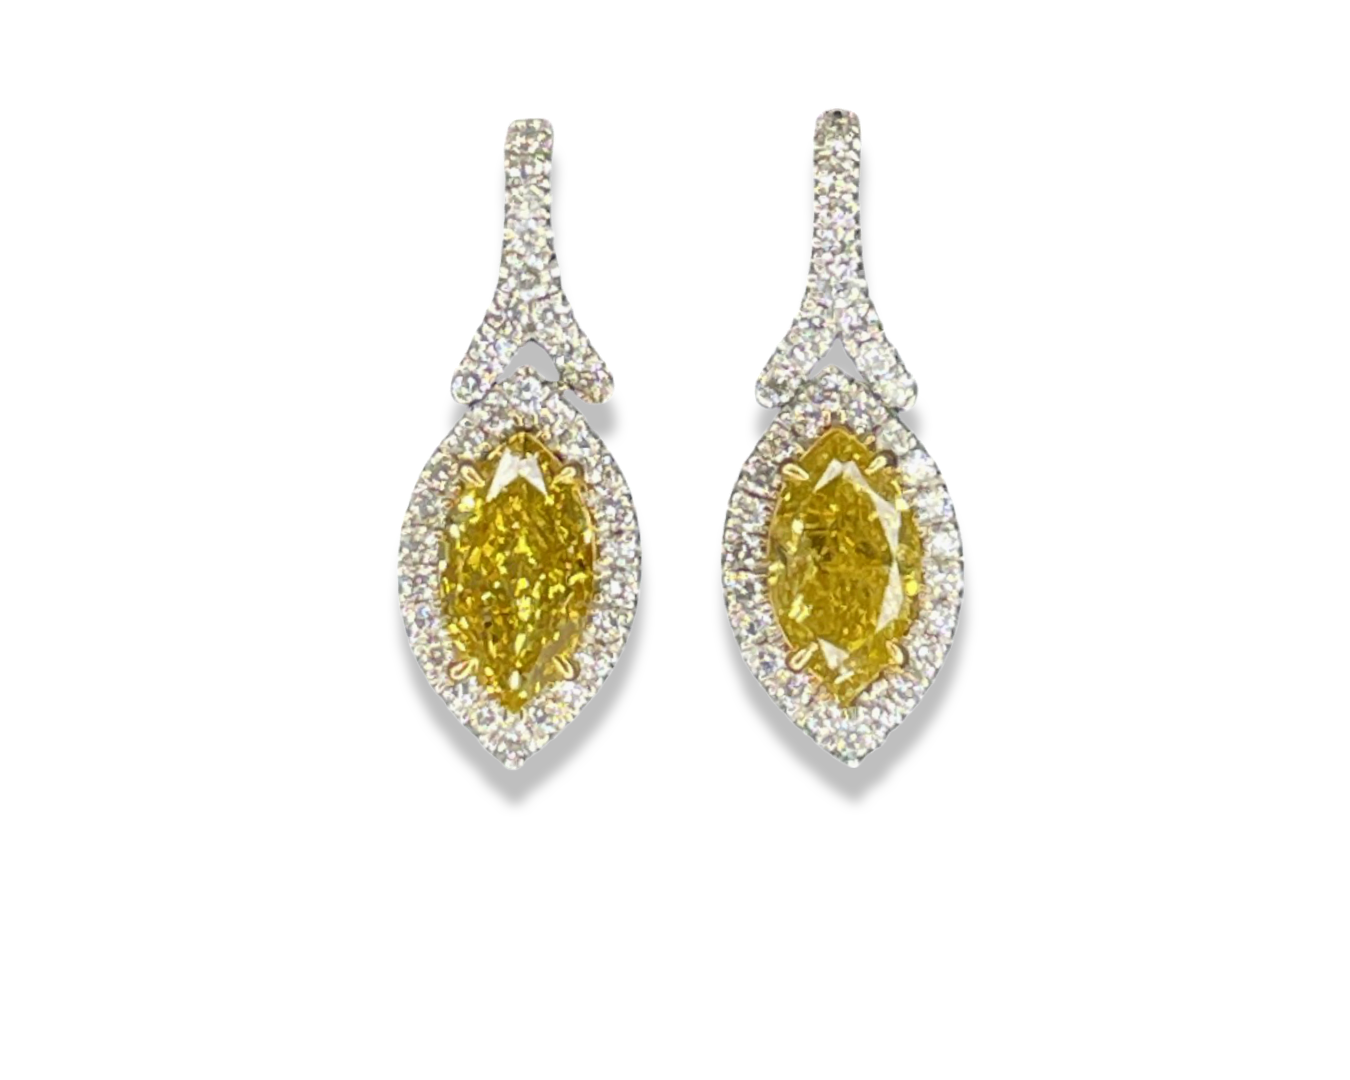 Henri's Classic - Yellow Marquise Diamond Earrings in 18k White Gold